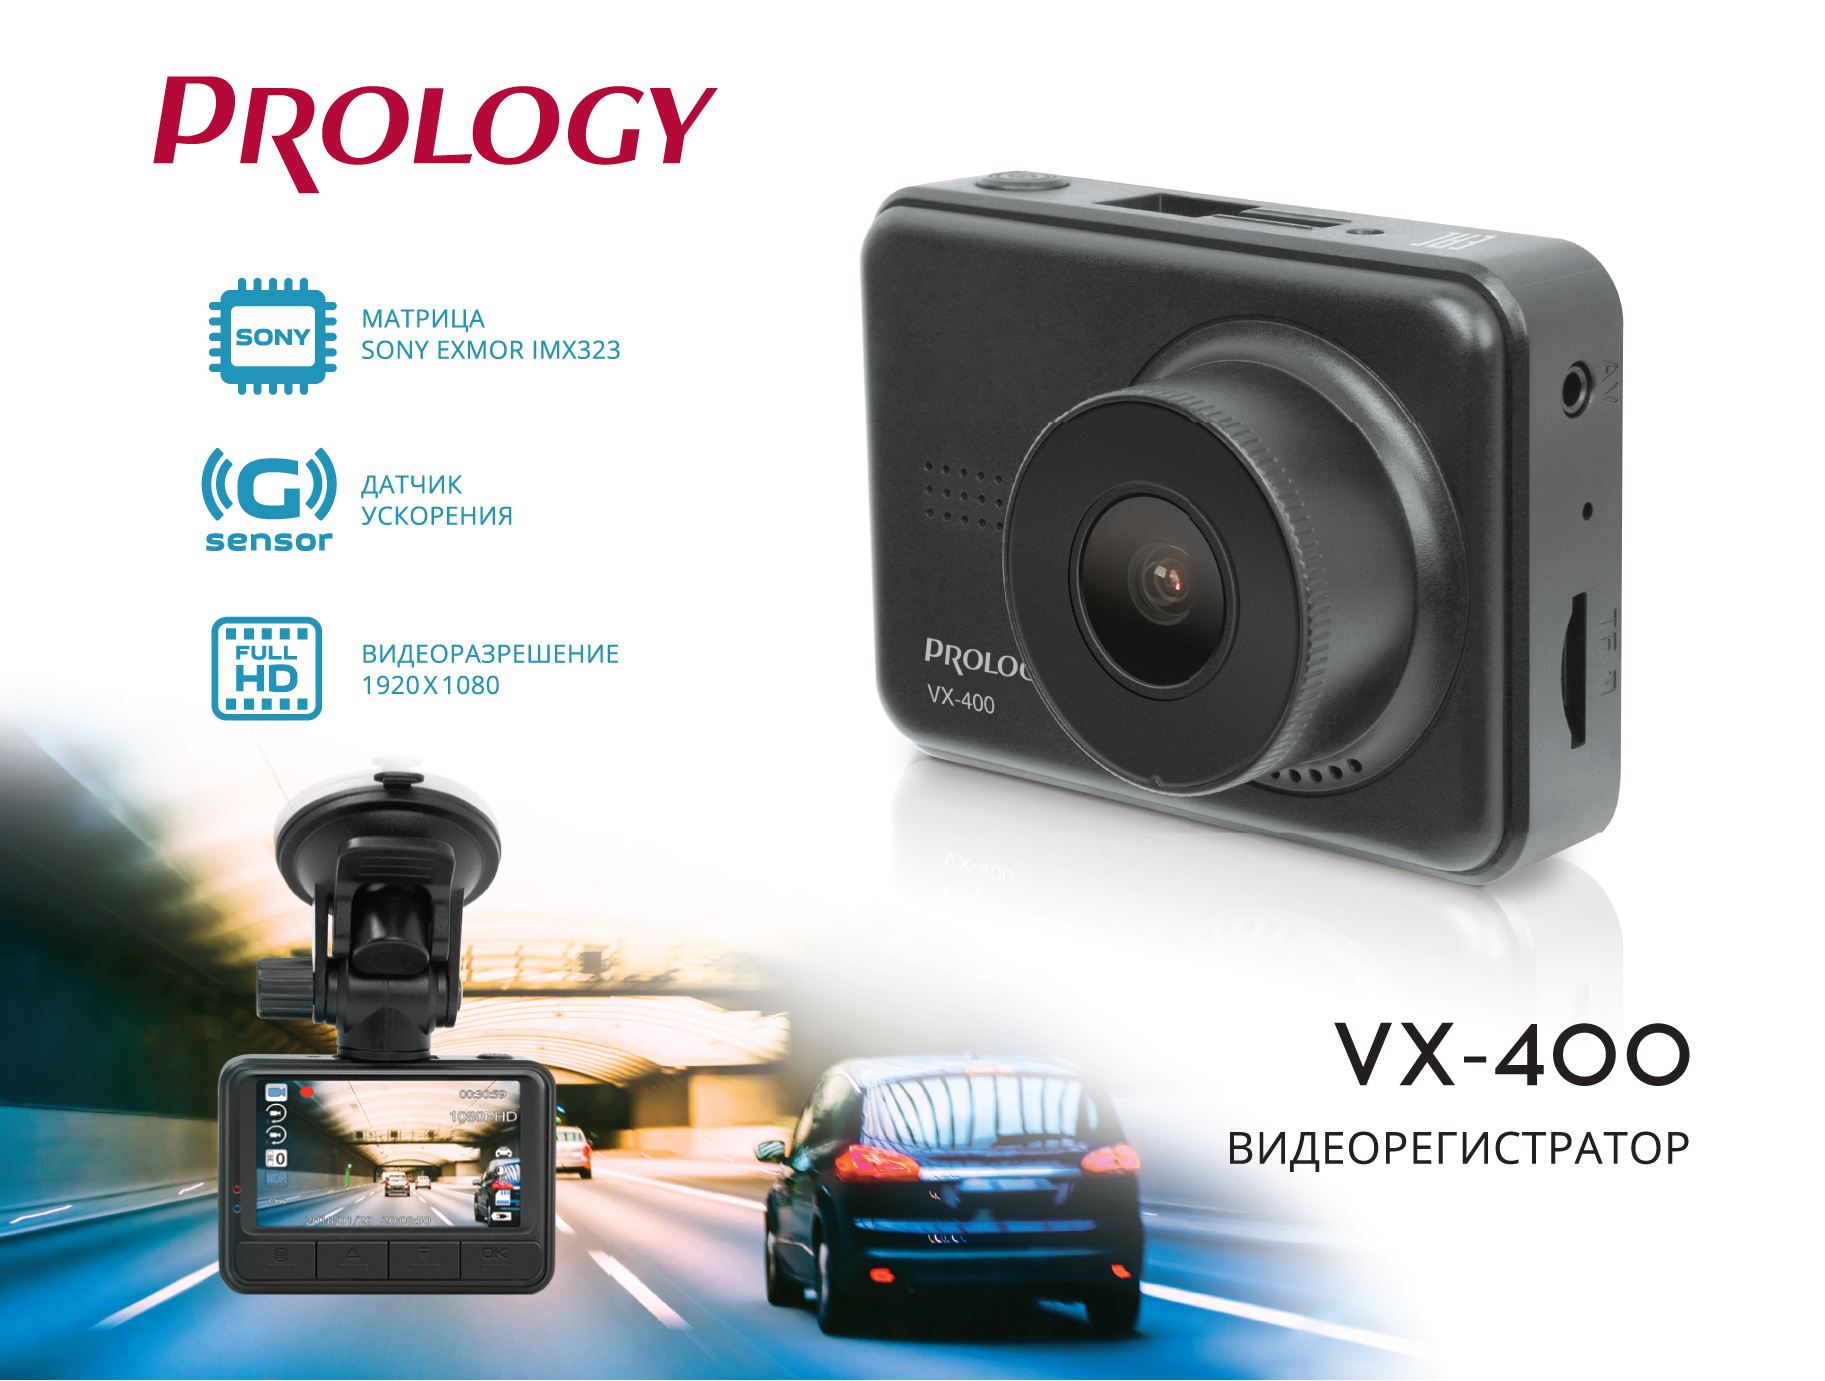 Матрица Sony и два кронштейна в комплекте! Встречайте новинку - видеорегистратор Prology VX-400.